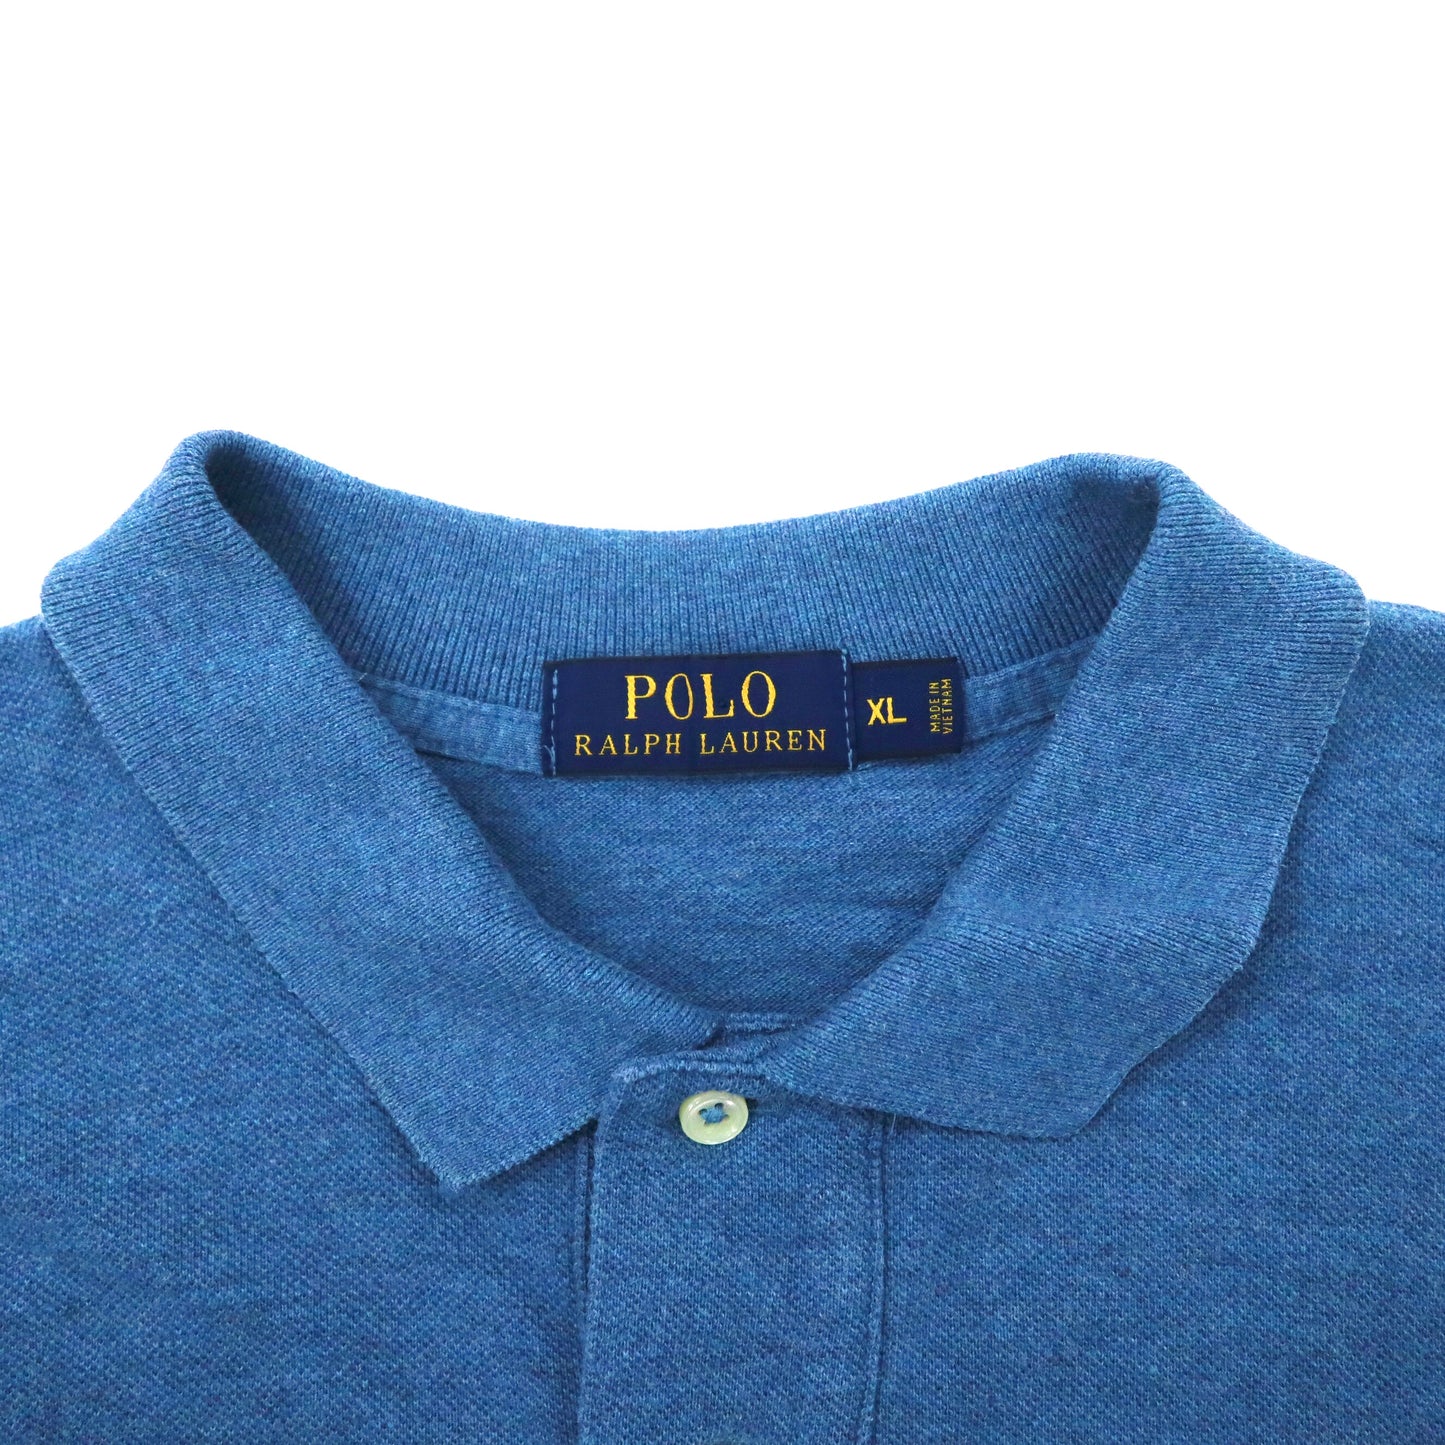 POLO RALPH LAUREN ビッグサイズ 長袖ポロシャツ XL ブルー コットン 鹿の子 スモールポニー刺繍